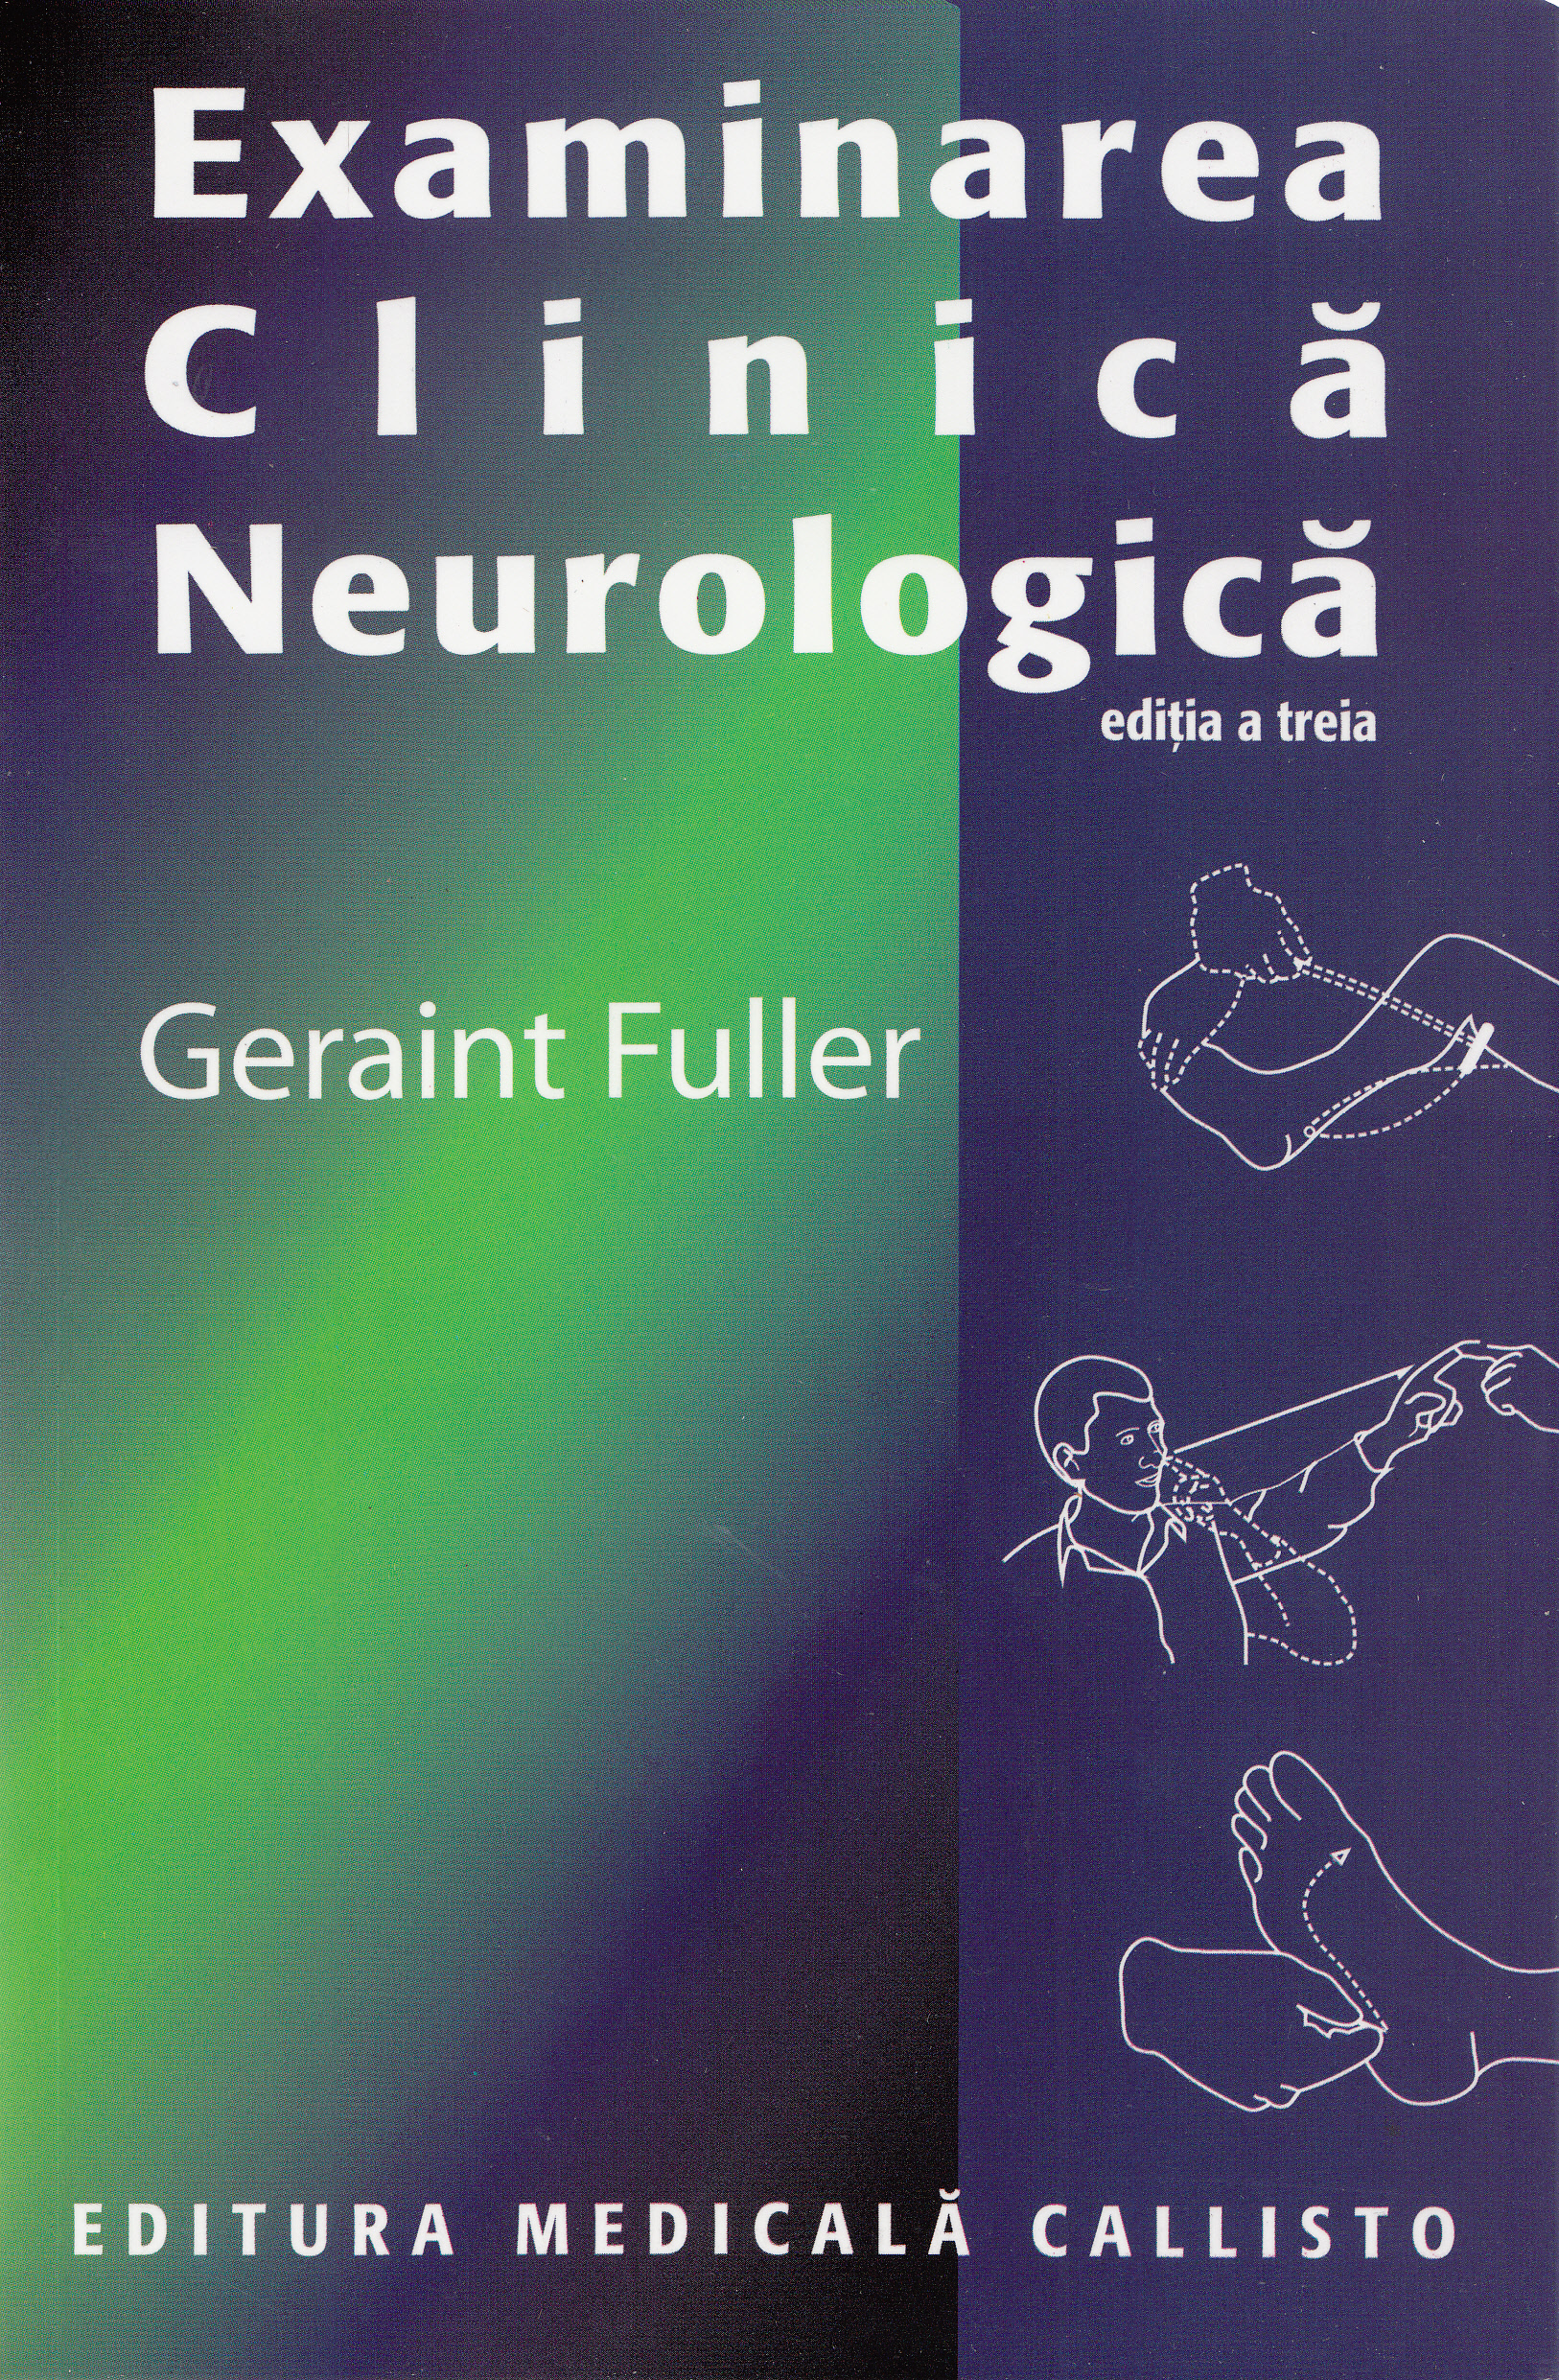 Examinarea clinica neurologica - Geraint Fuller